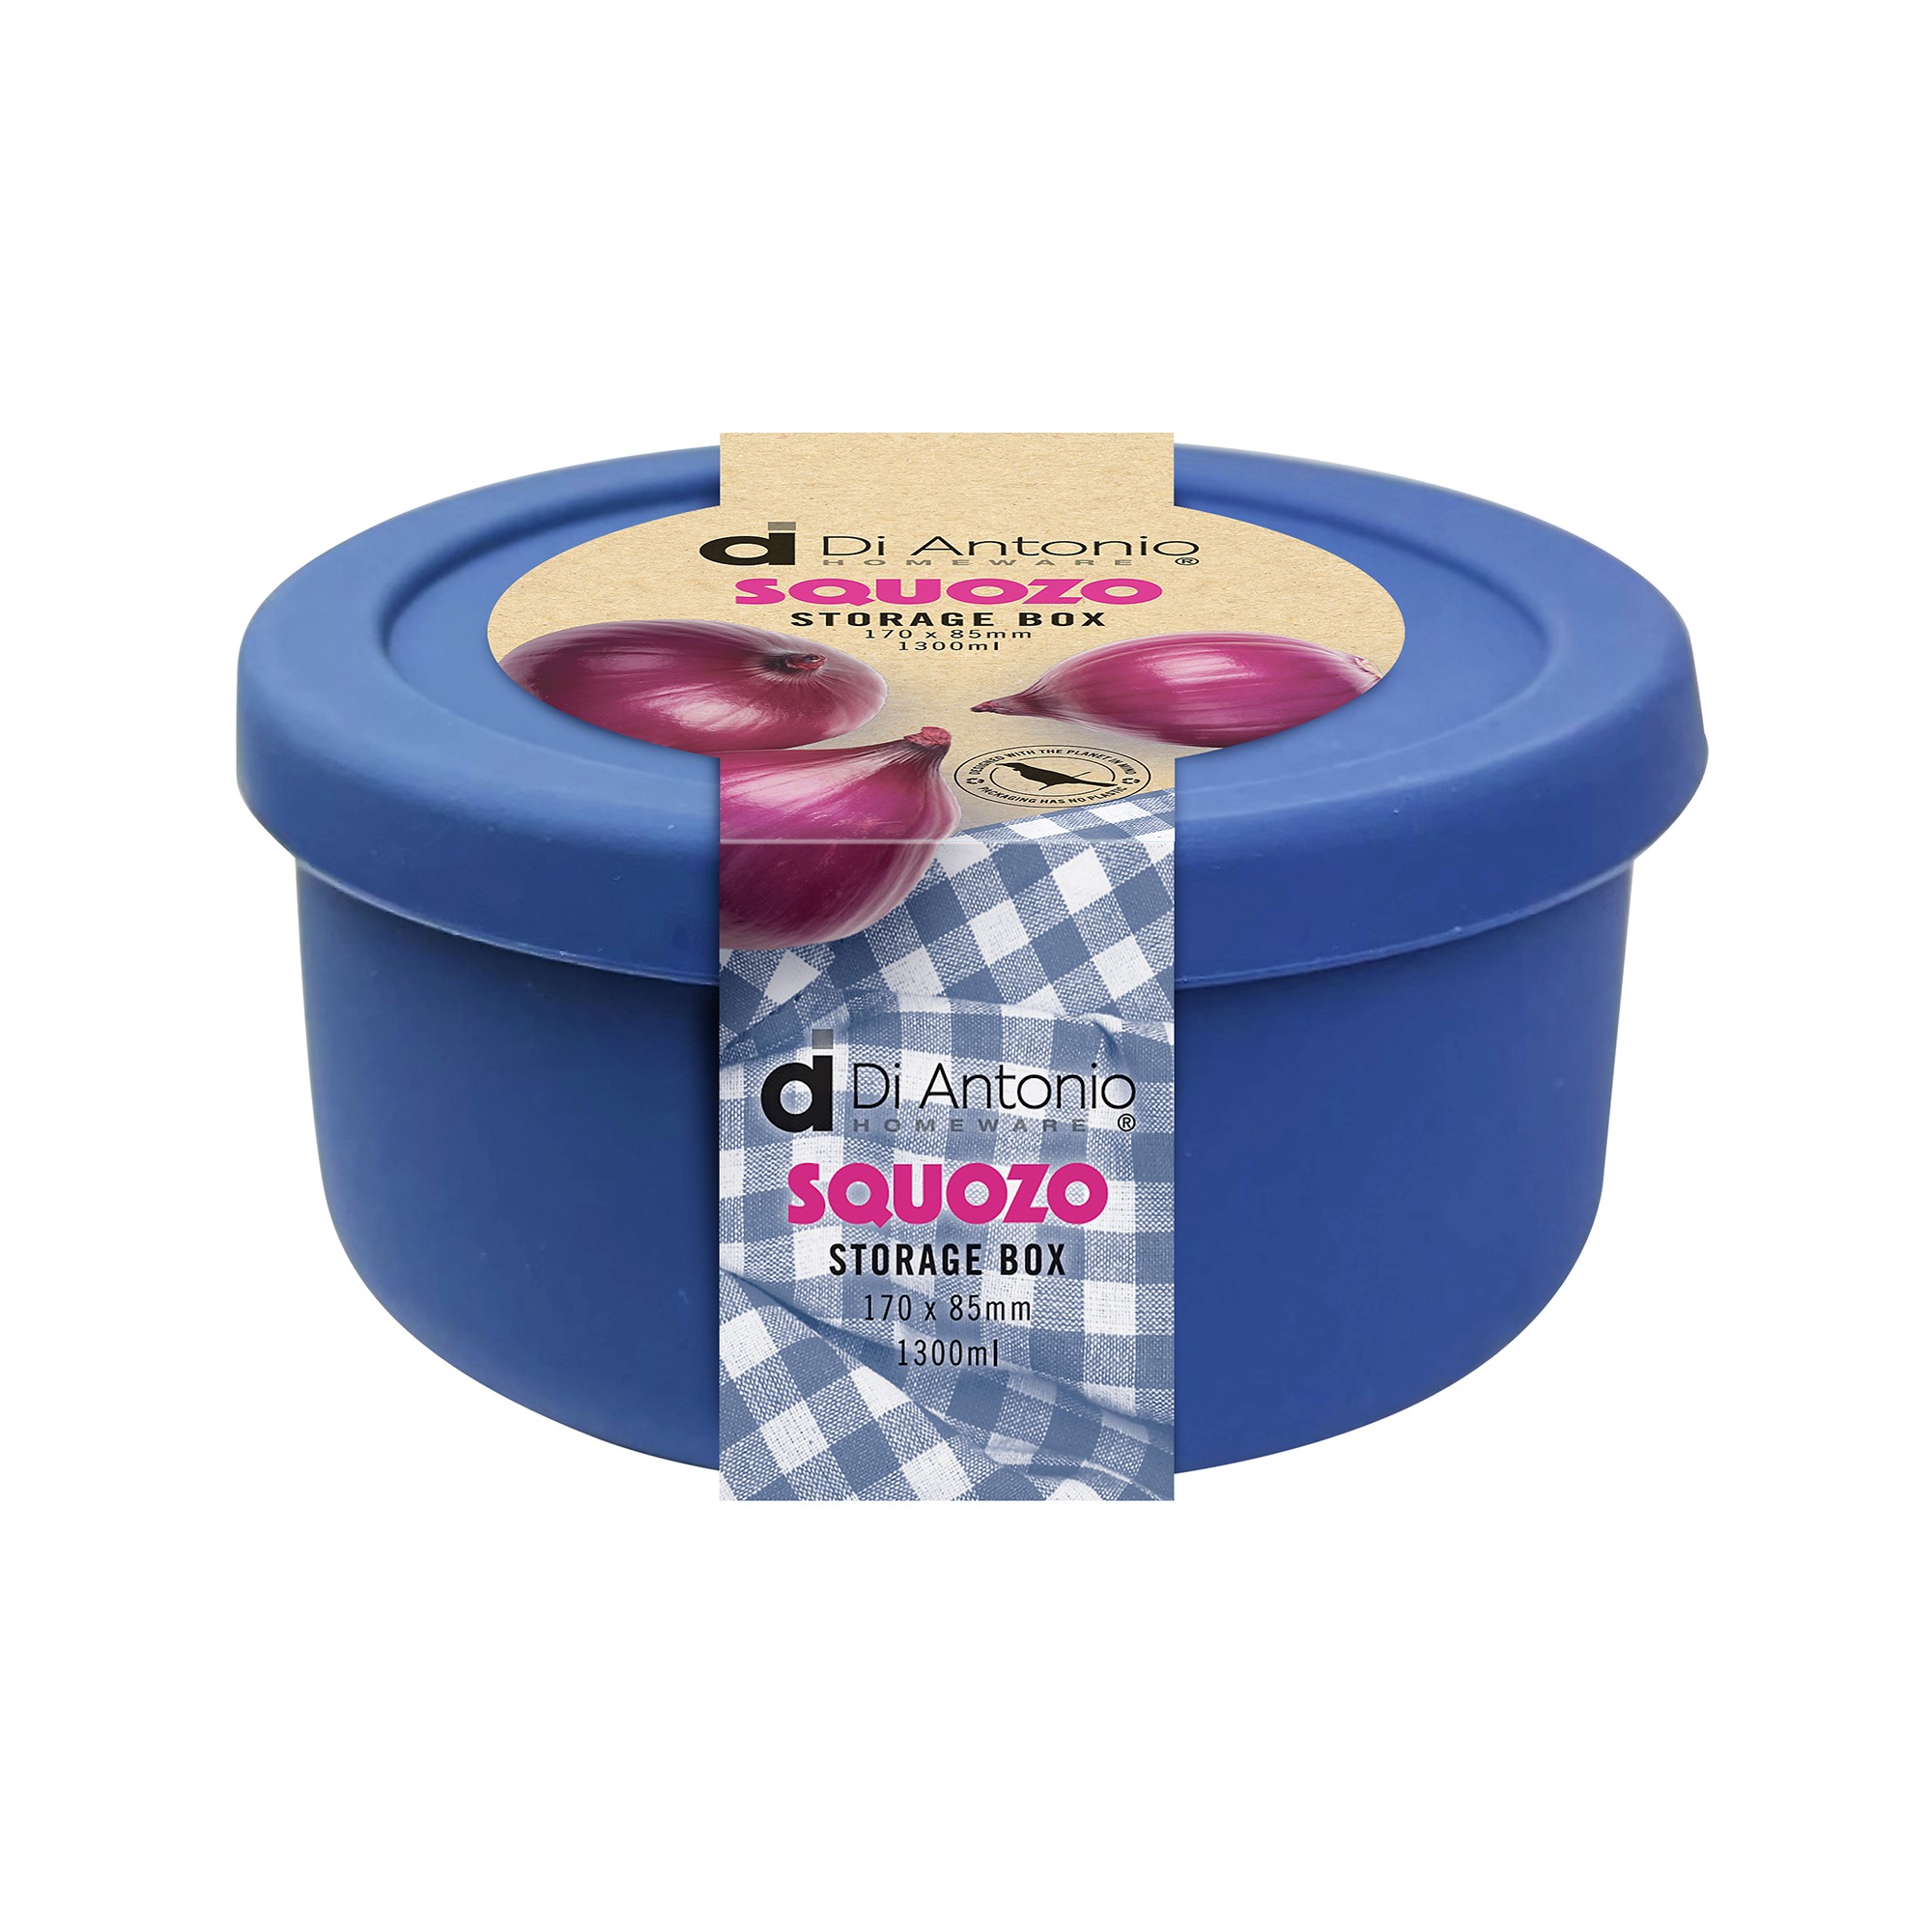 New Zealand Kitchen Products | Squozo